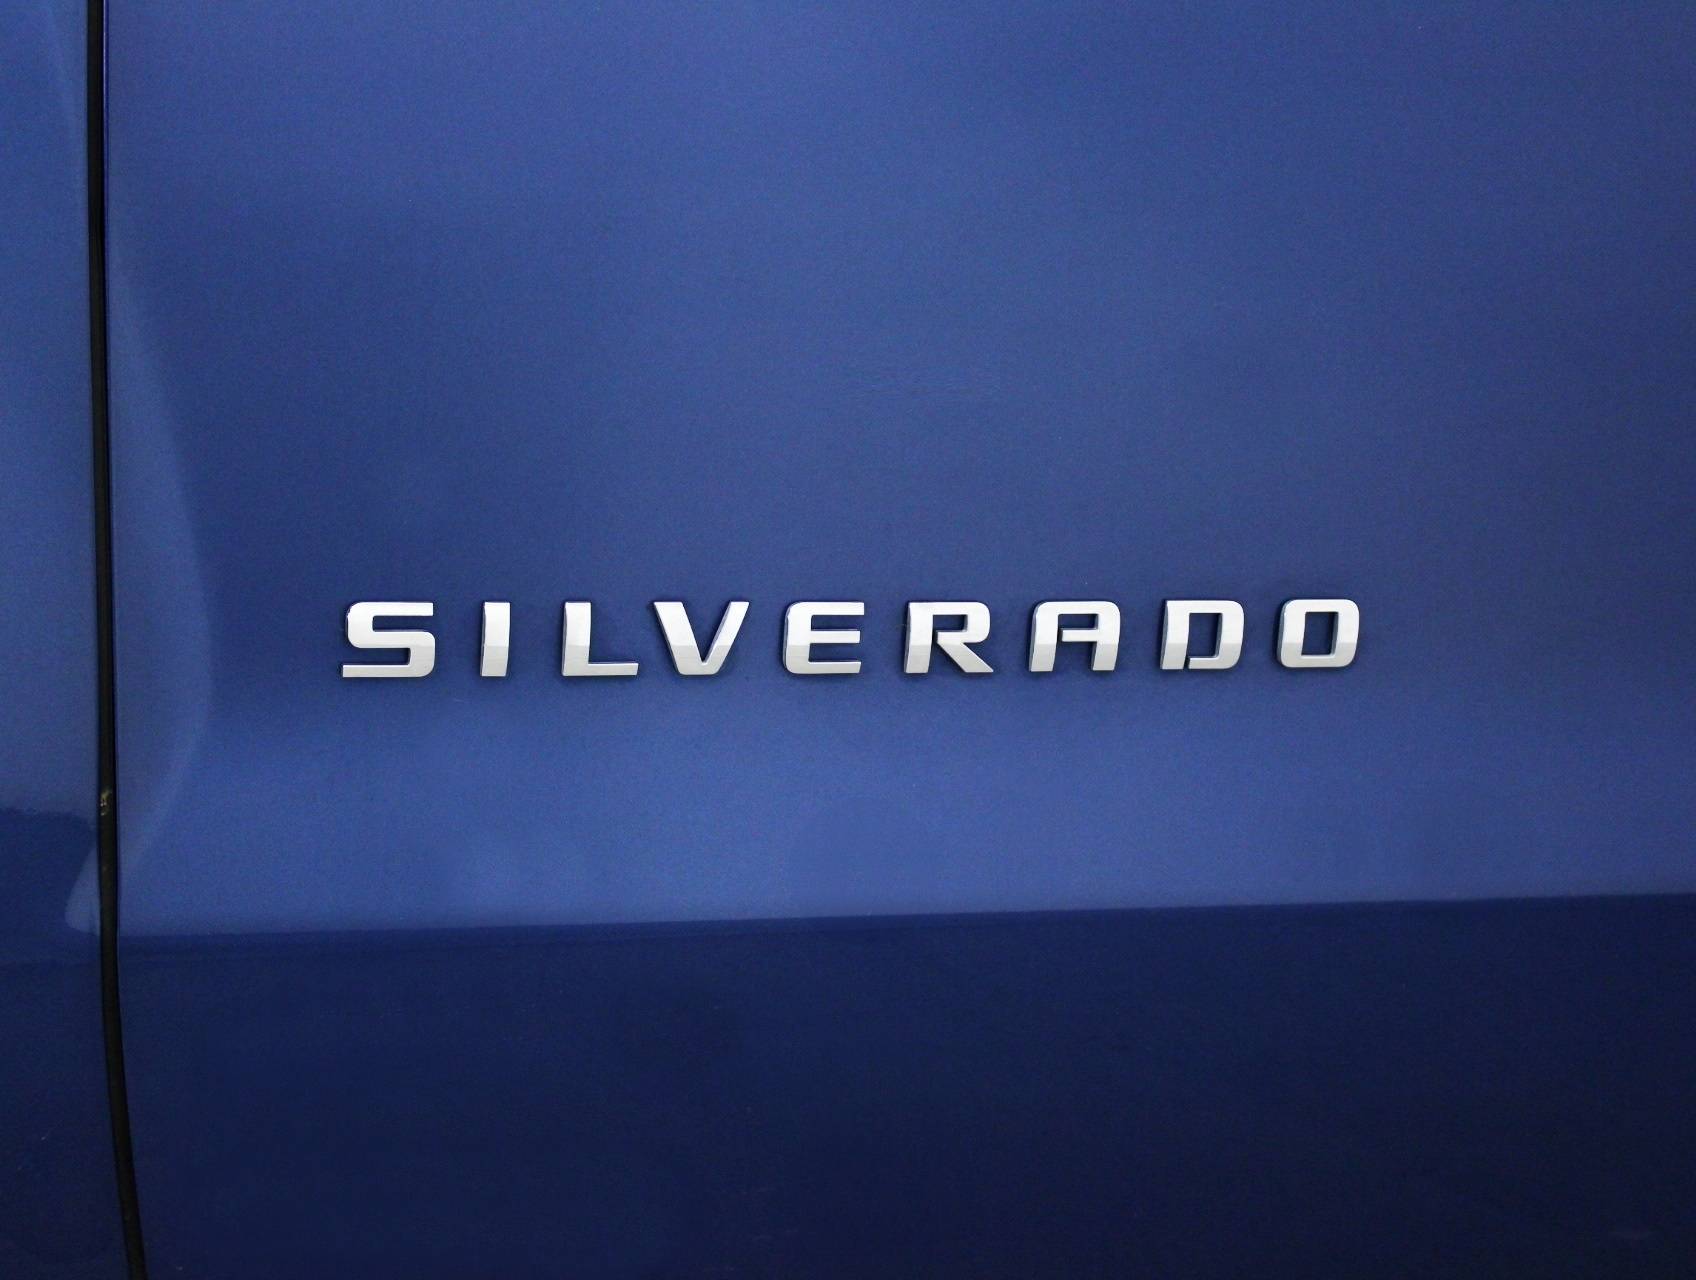 Florida Fine Cars - Used CHEVROLET SILVERADO 2015 HOLLYWOOD Ls